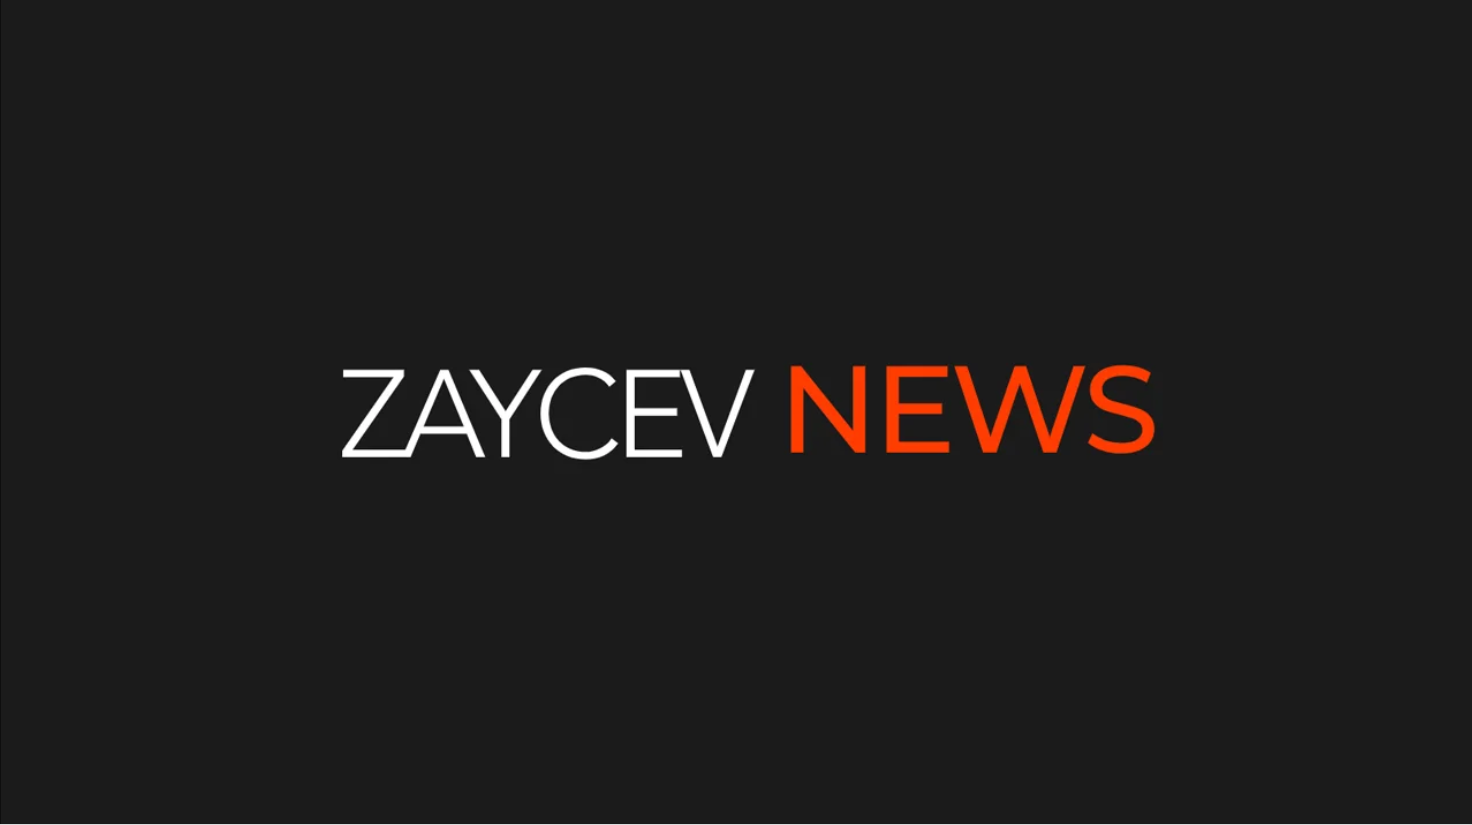 Подкаст ZAYCEV NEWS 25.11.2022